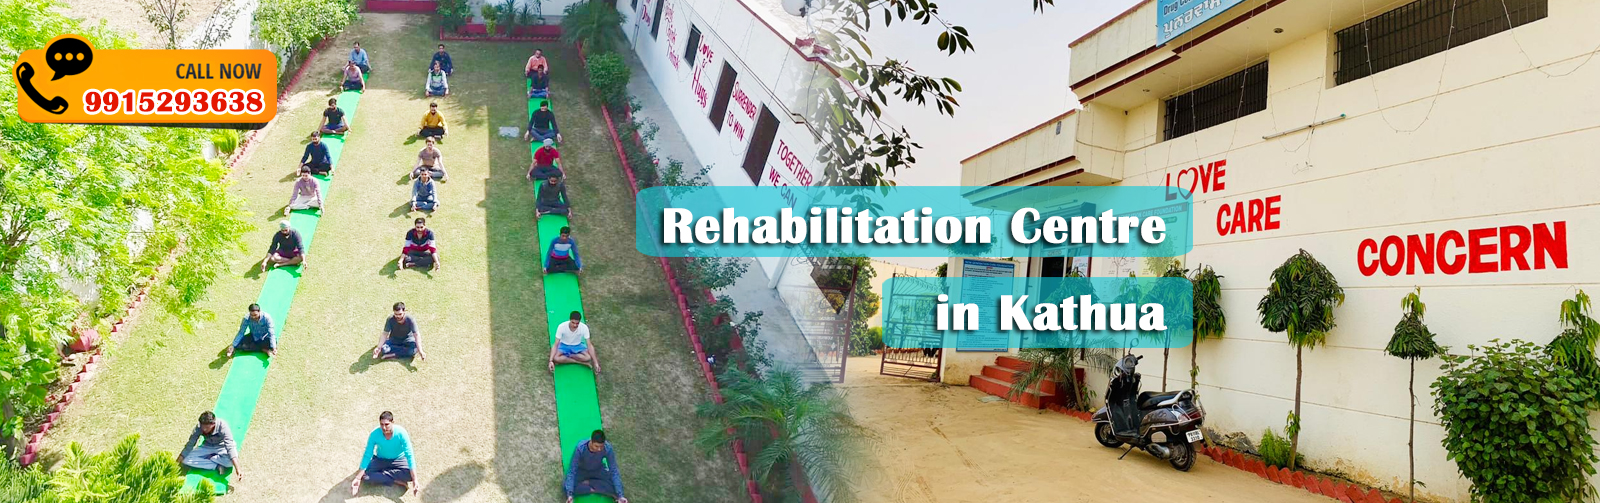 Rehabilitation Centre in Kathua